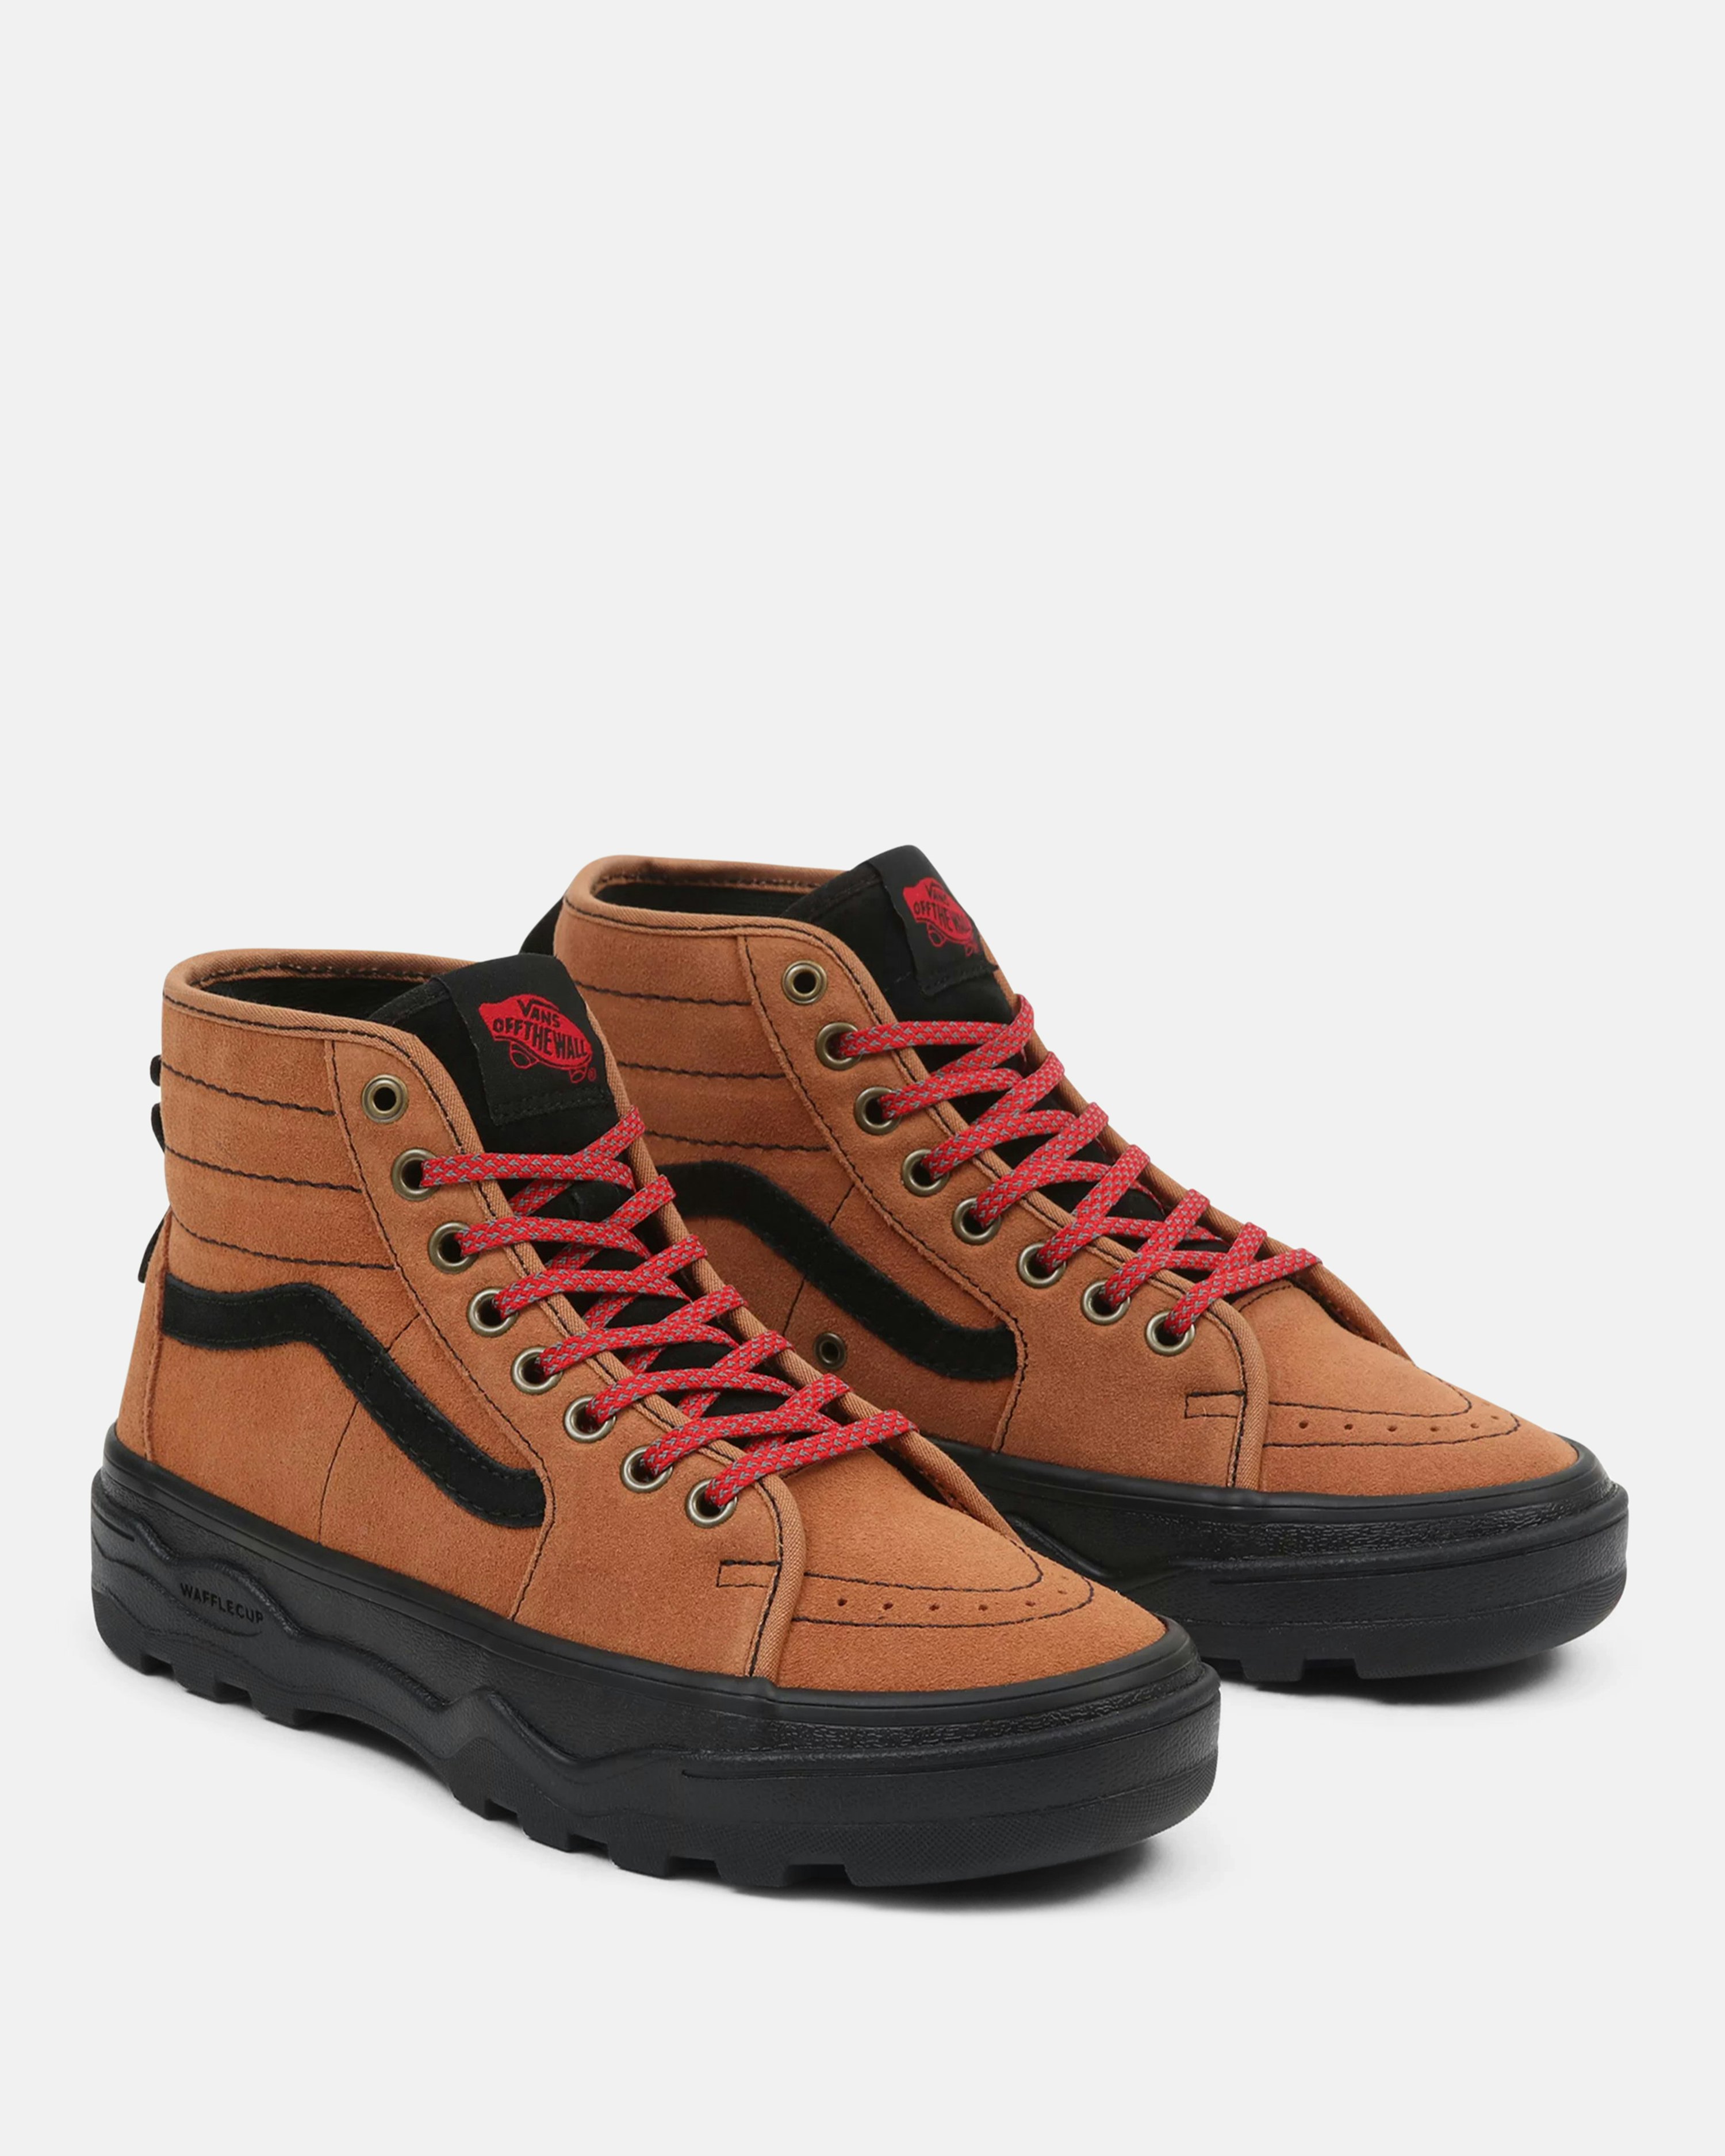 oveja Llorar Cierto Vans Shoes - Sentry sk8 Brown | Women | at Junkyard.com